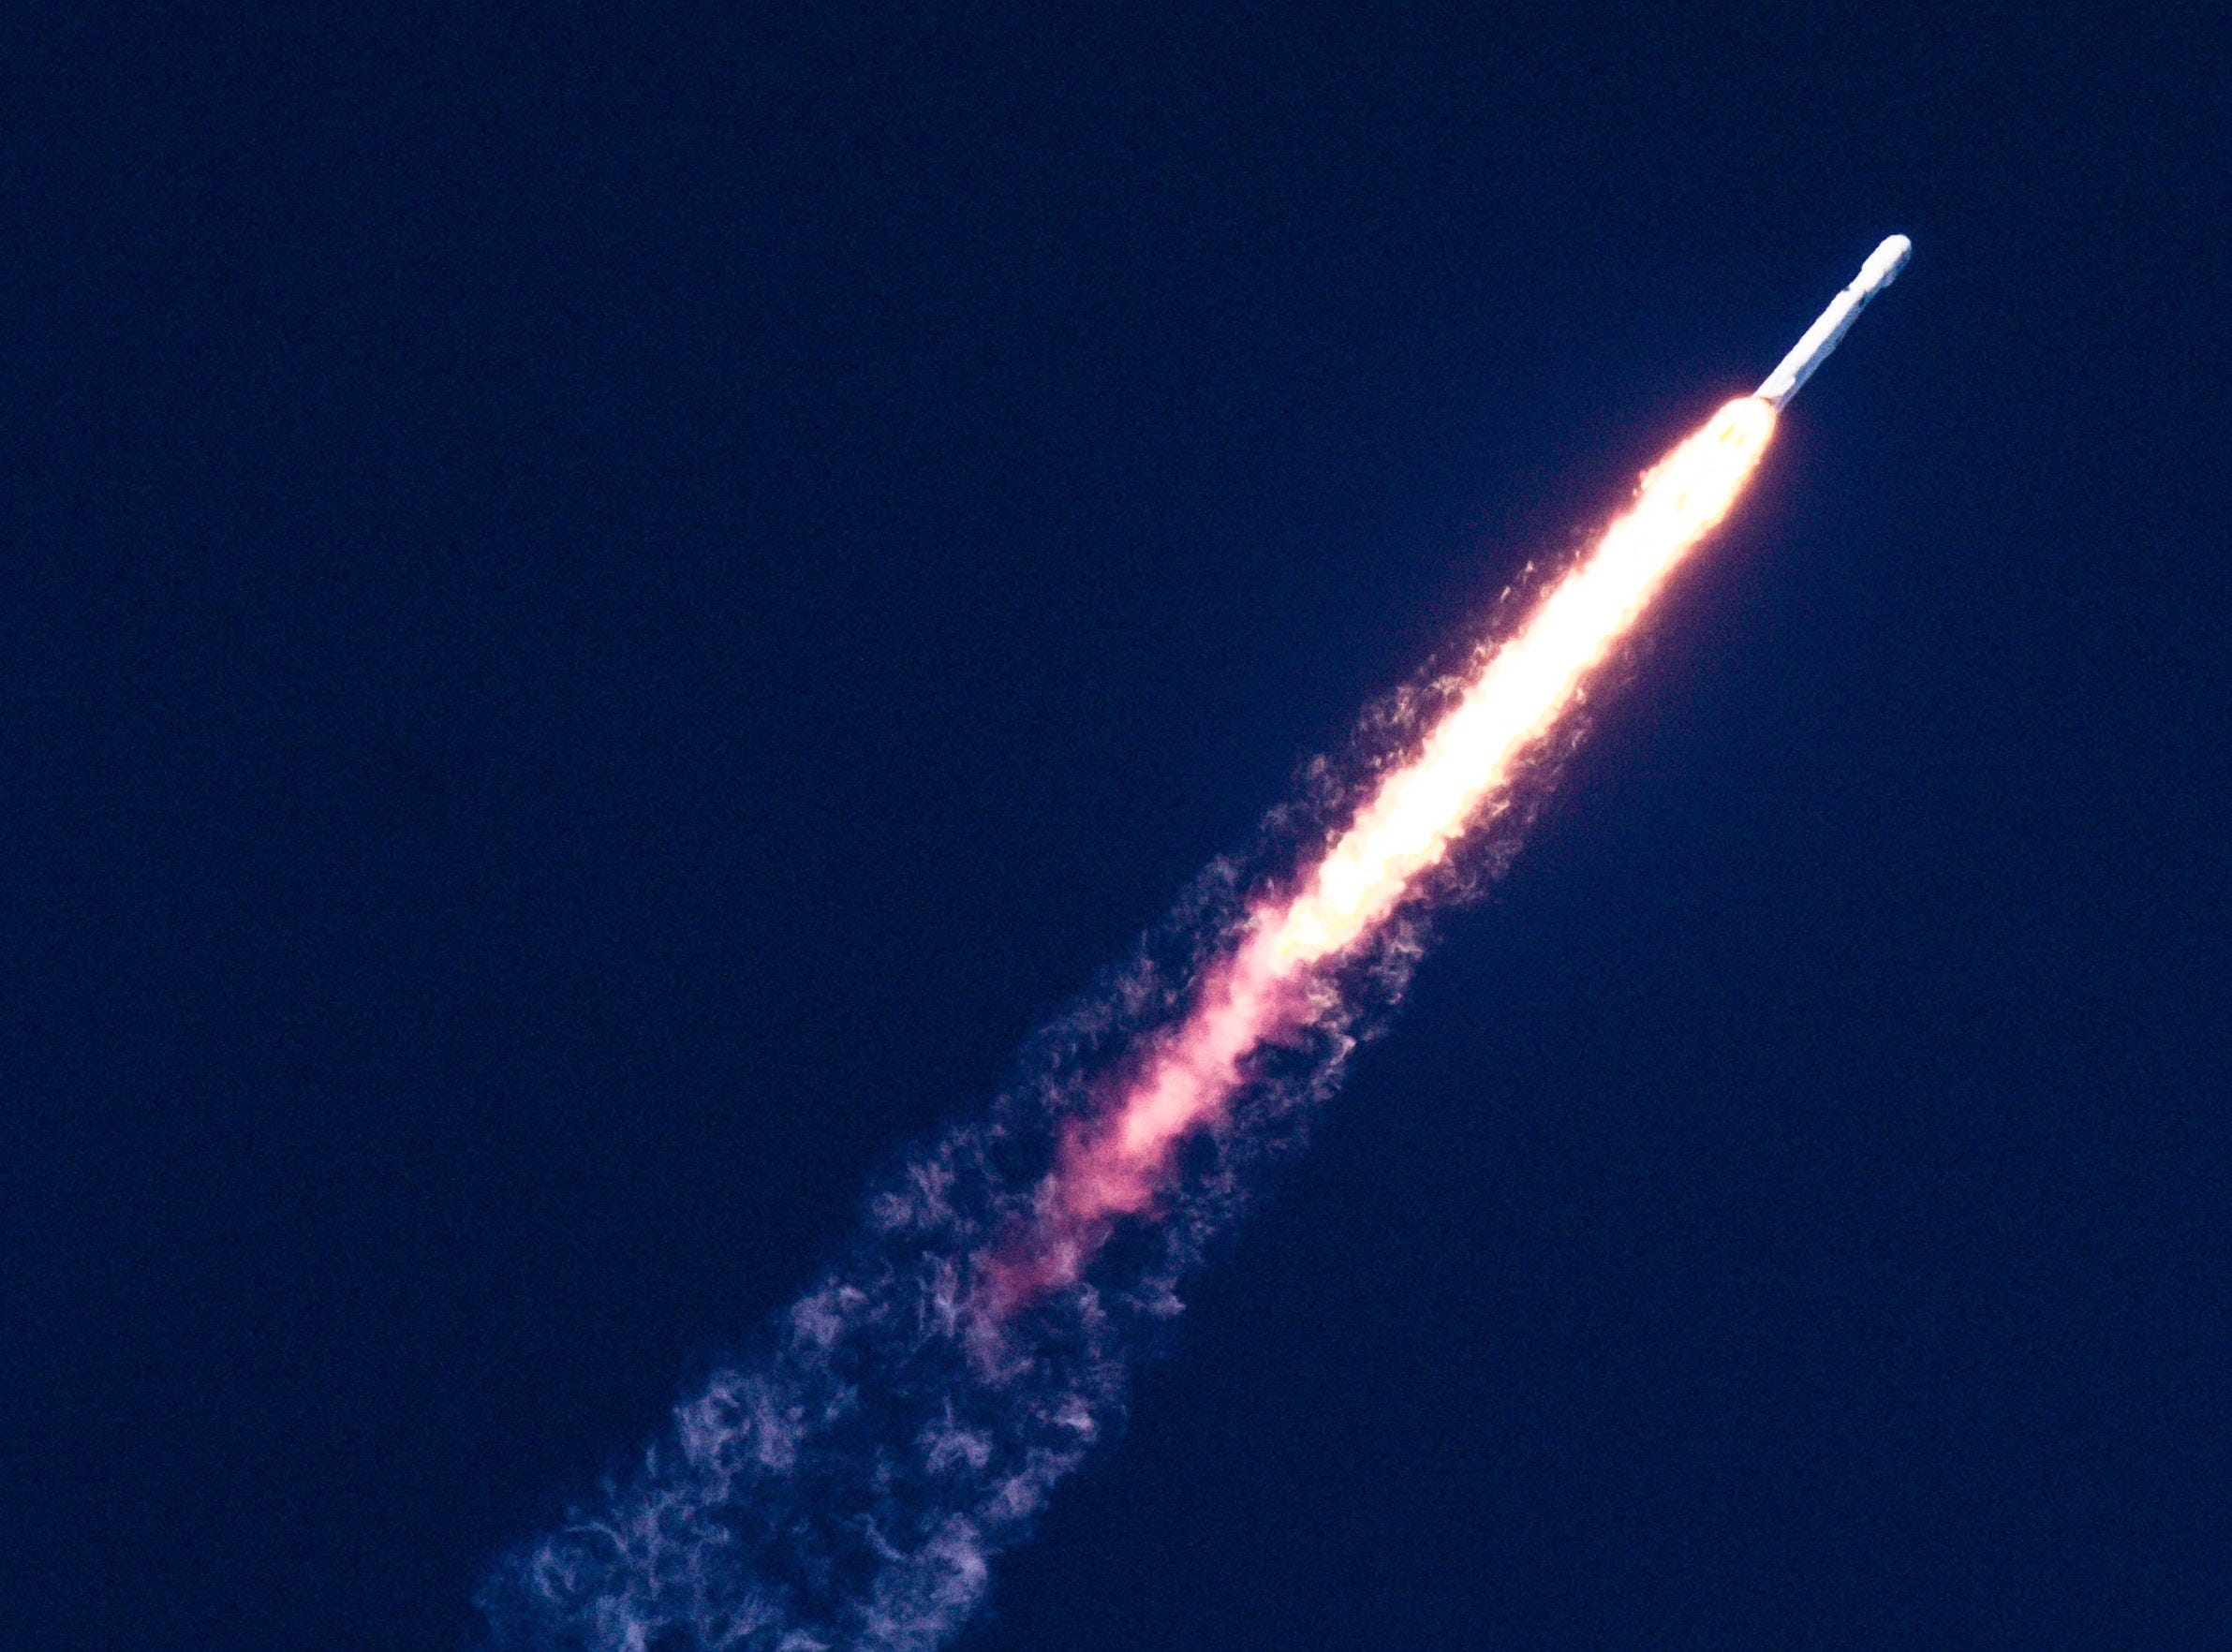 the Falcon Heavy rocket ascension